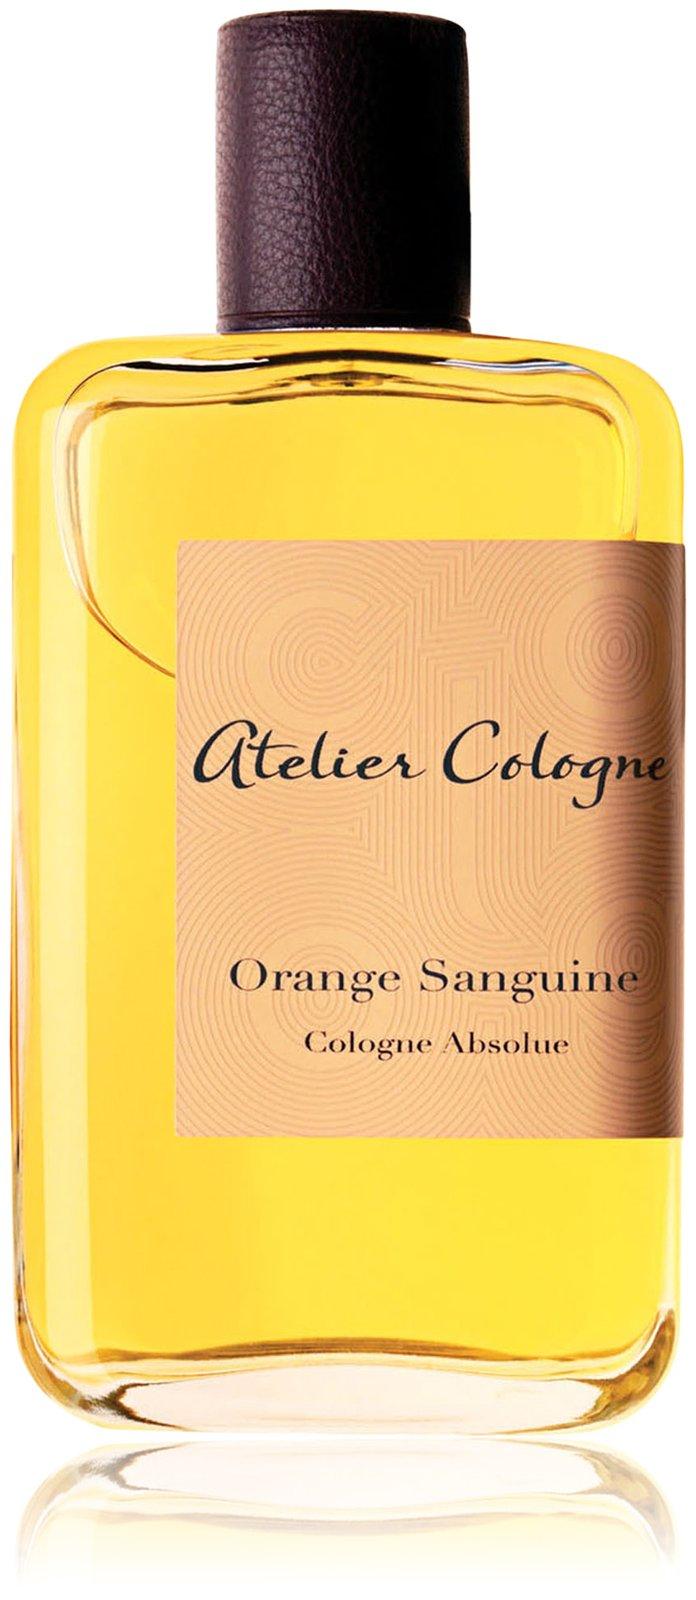 Atelier Cologne Cologne Absolue - Orange Sanguine - 6.7 Oz